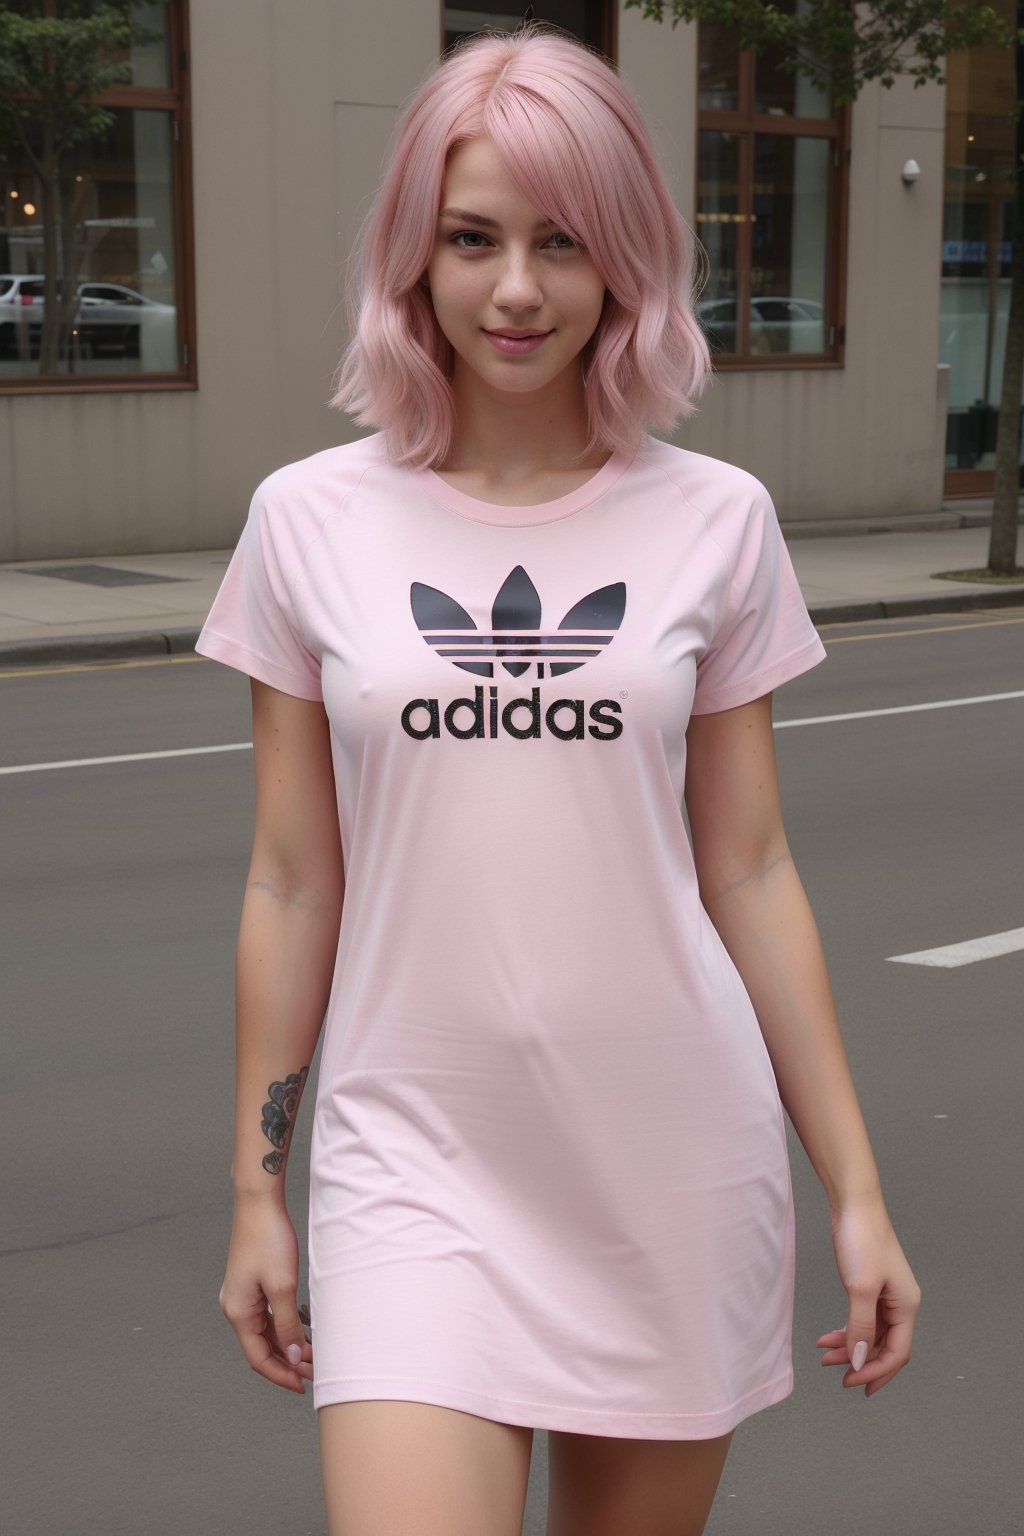 young woman, pink hair, sexy adidas tshirt dress, raw-photo